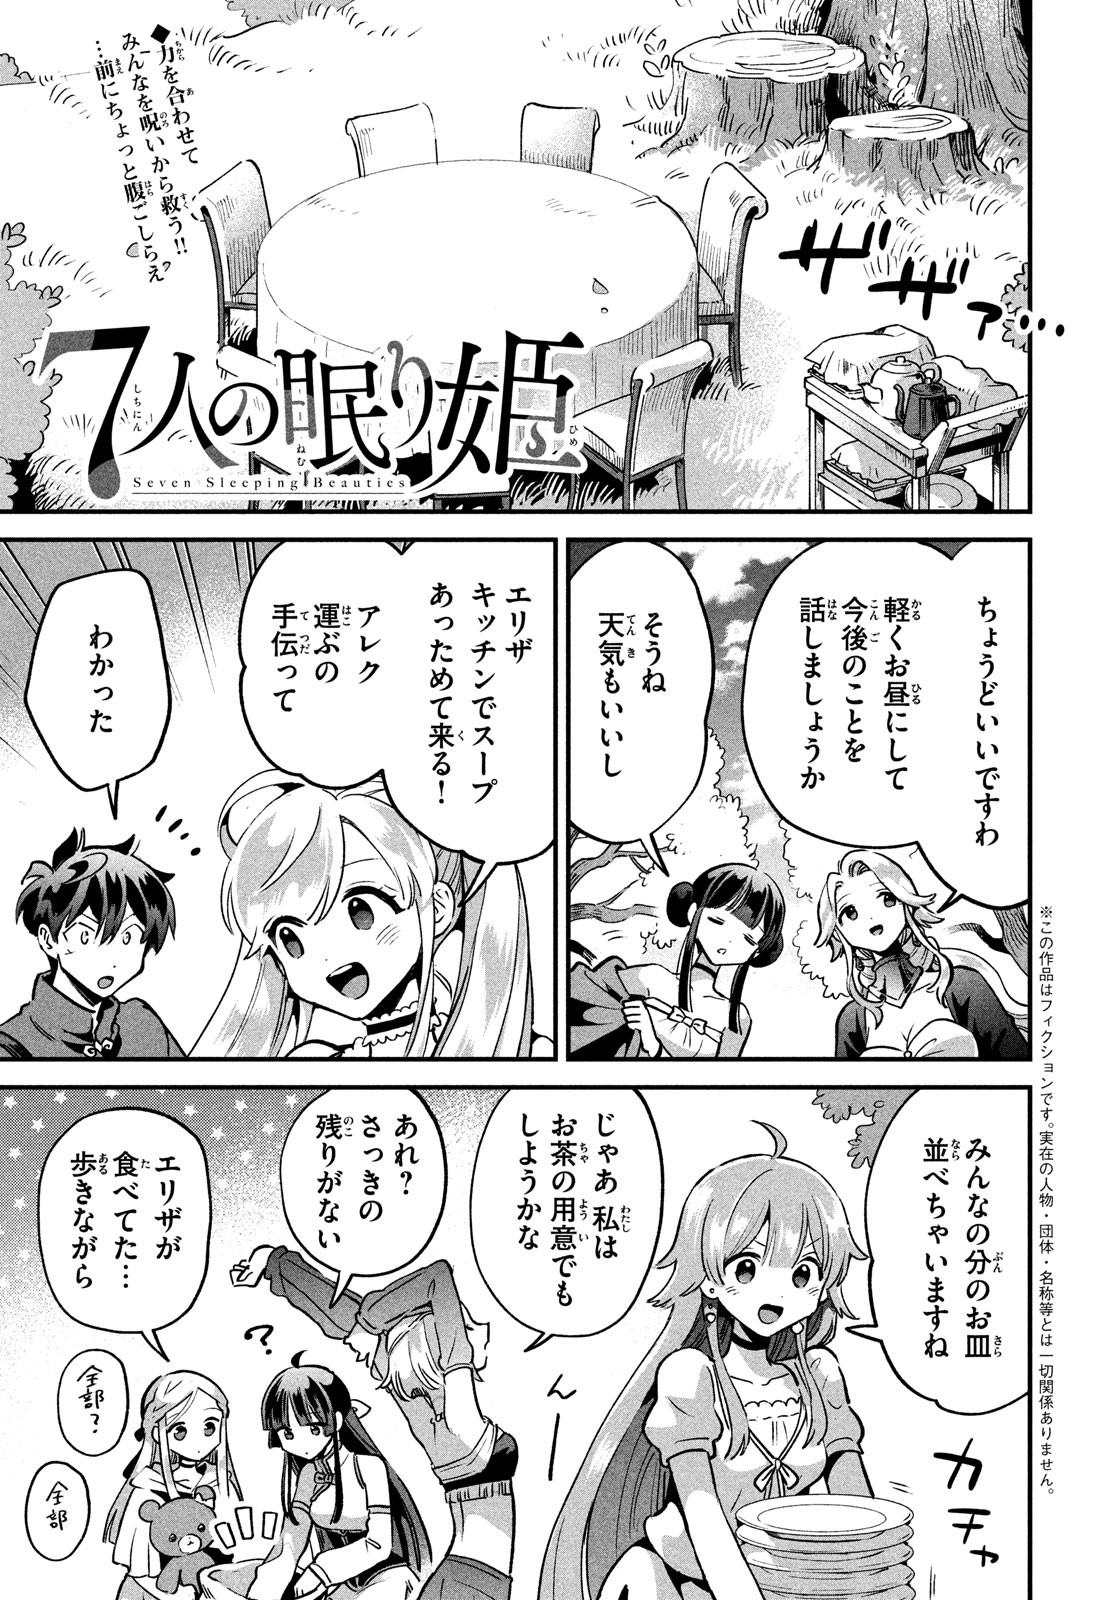 7-nin no Nemuri Hime - Chapter 29 - Page 1